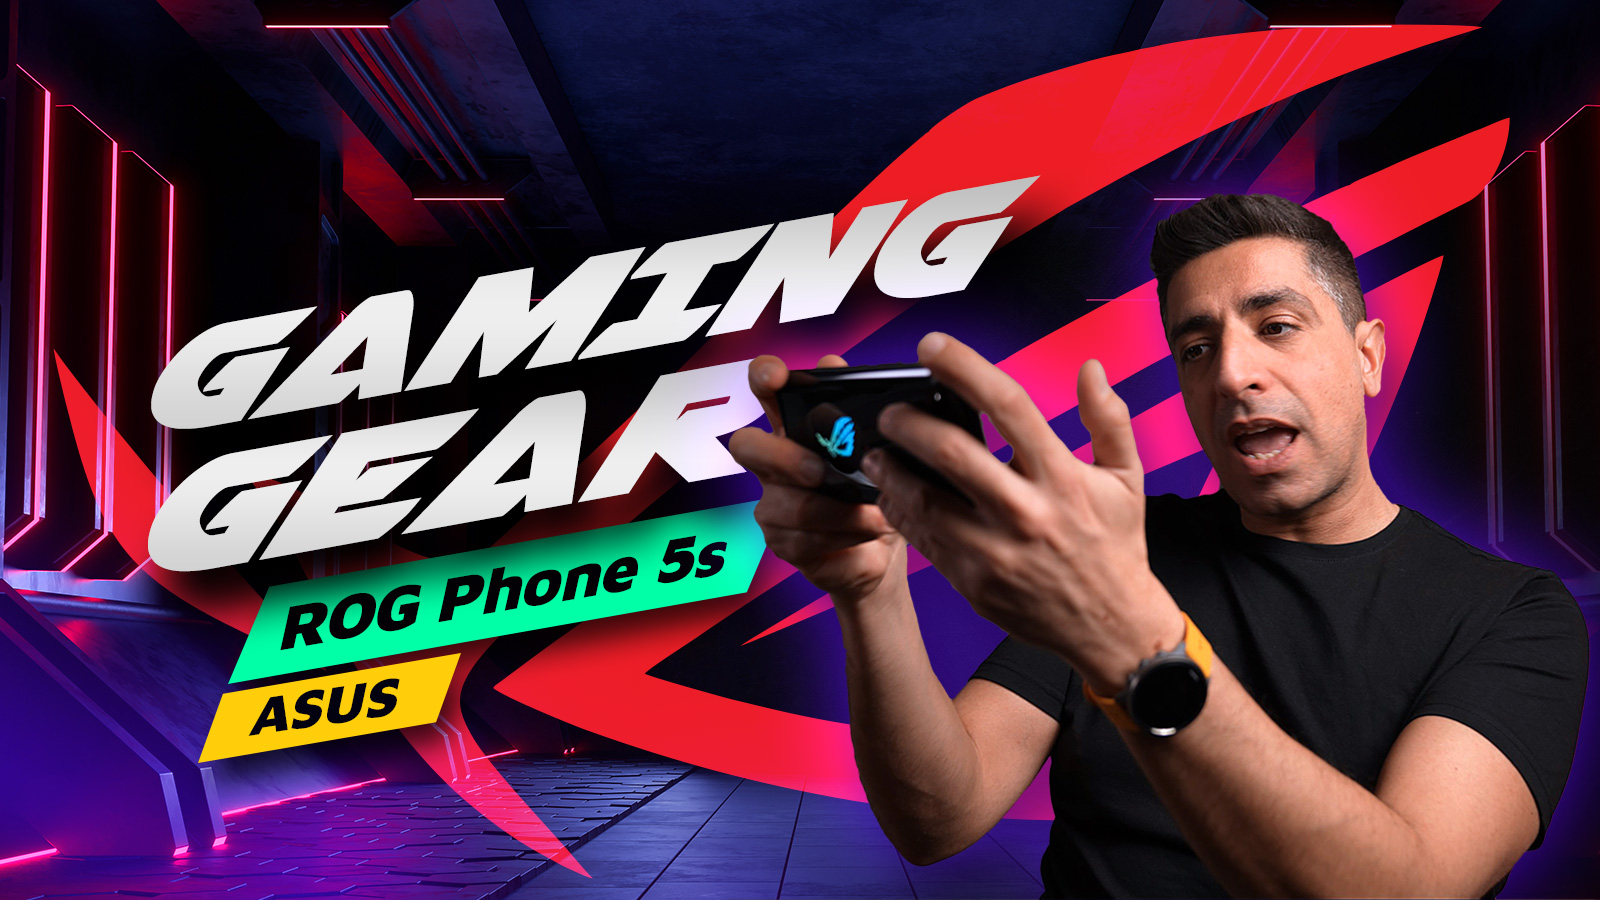 Rog Phone 5s review, ASUS Rog Phone 5s review: Gaming Gear!